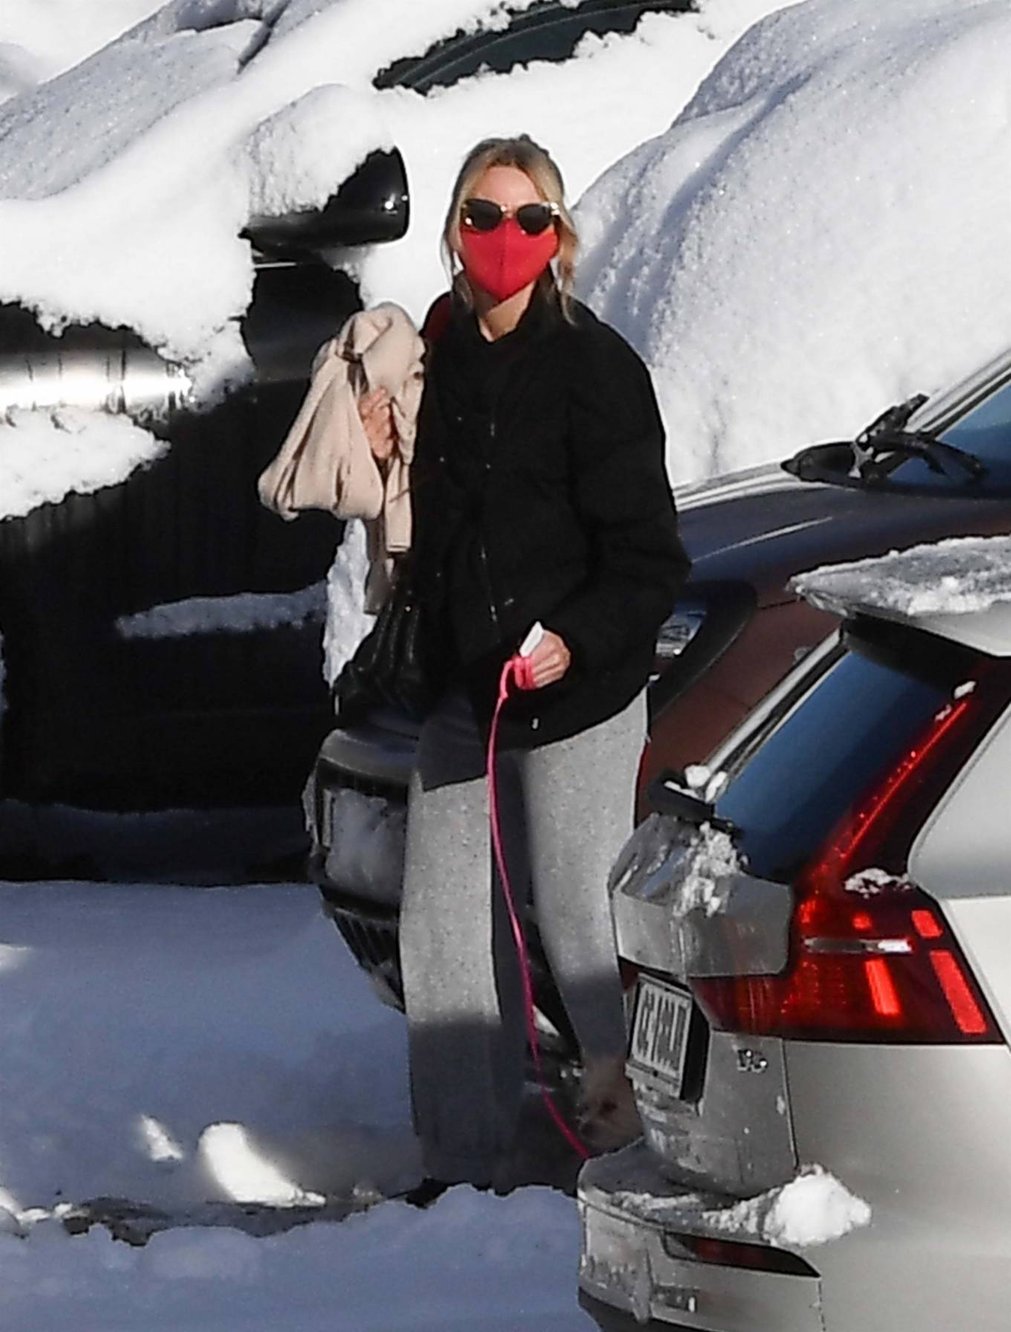 Naomi Watts and Liev Schreiber - At the ski resort of Cortina d'Ampezzo - Italy